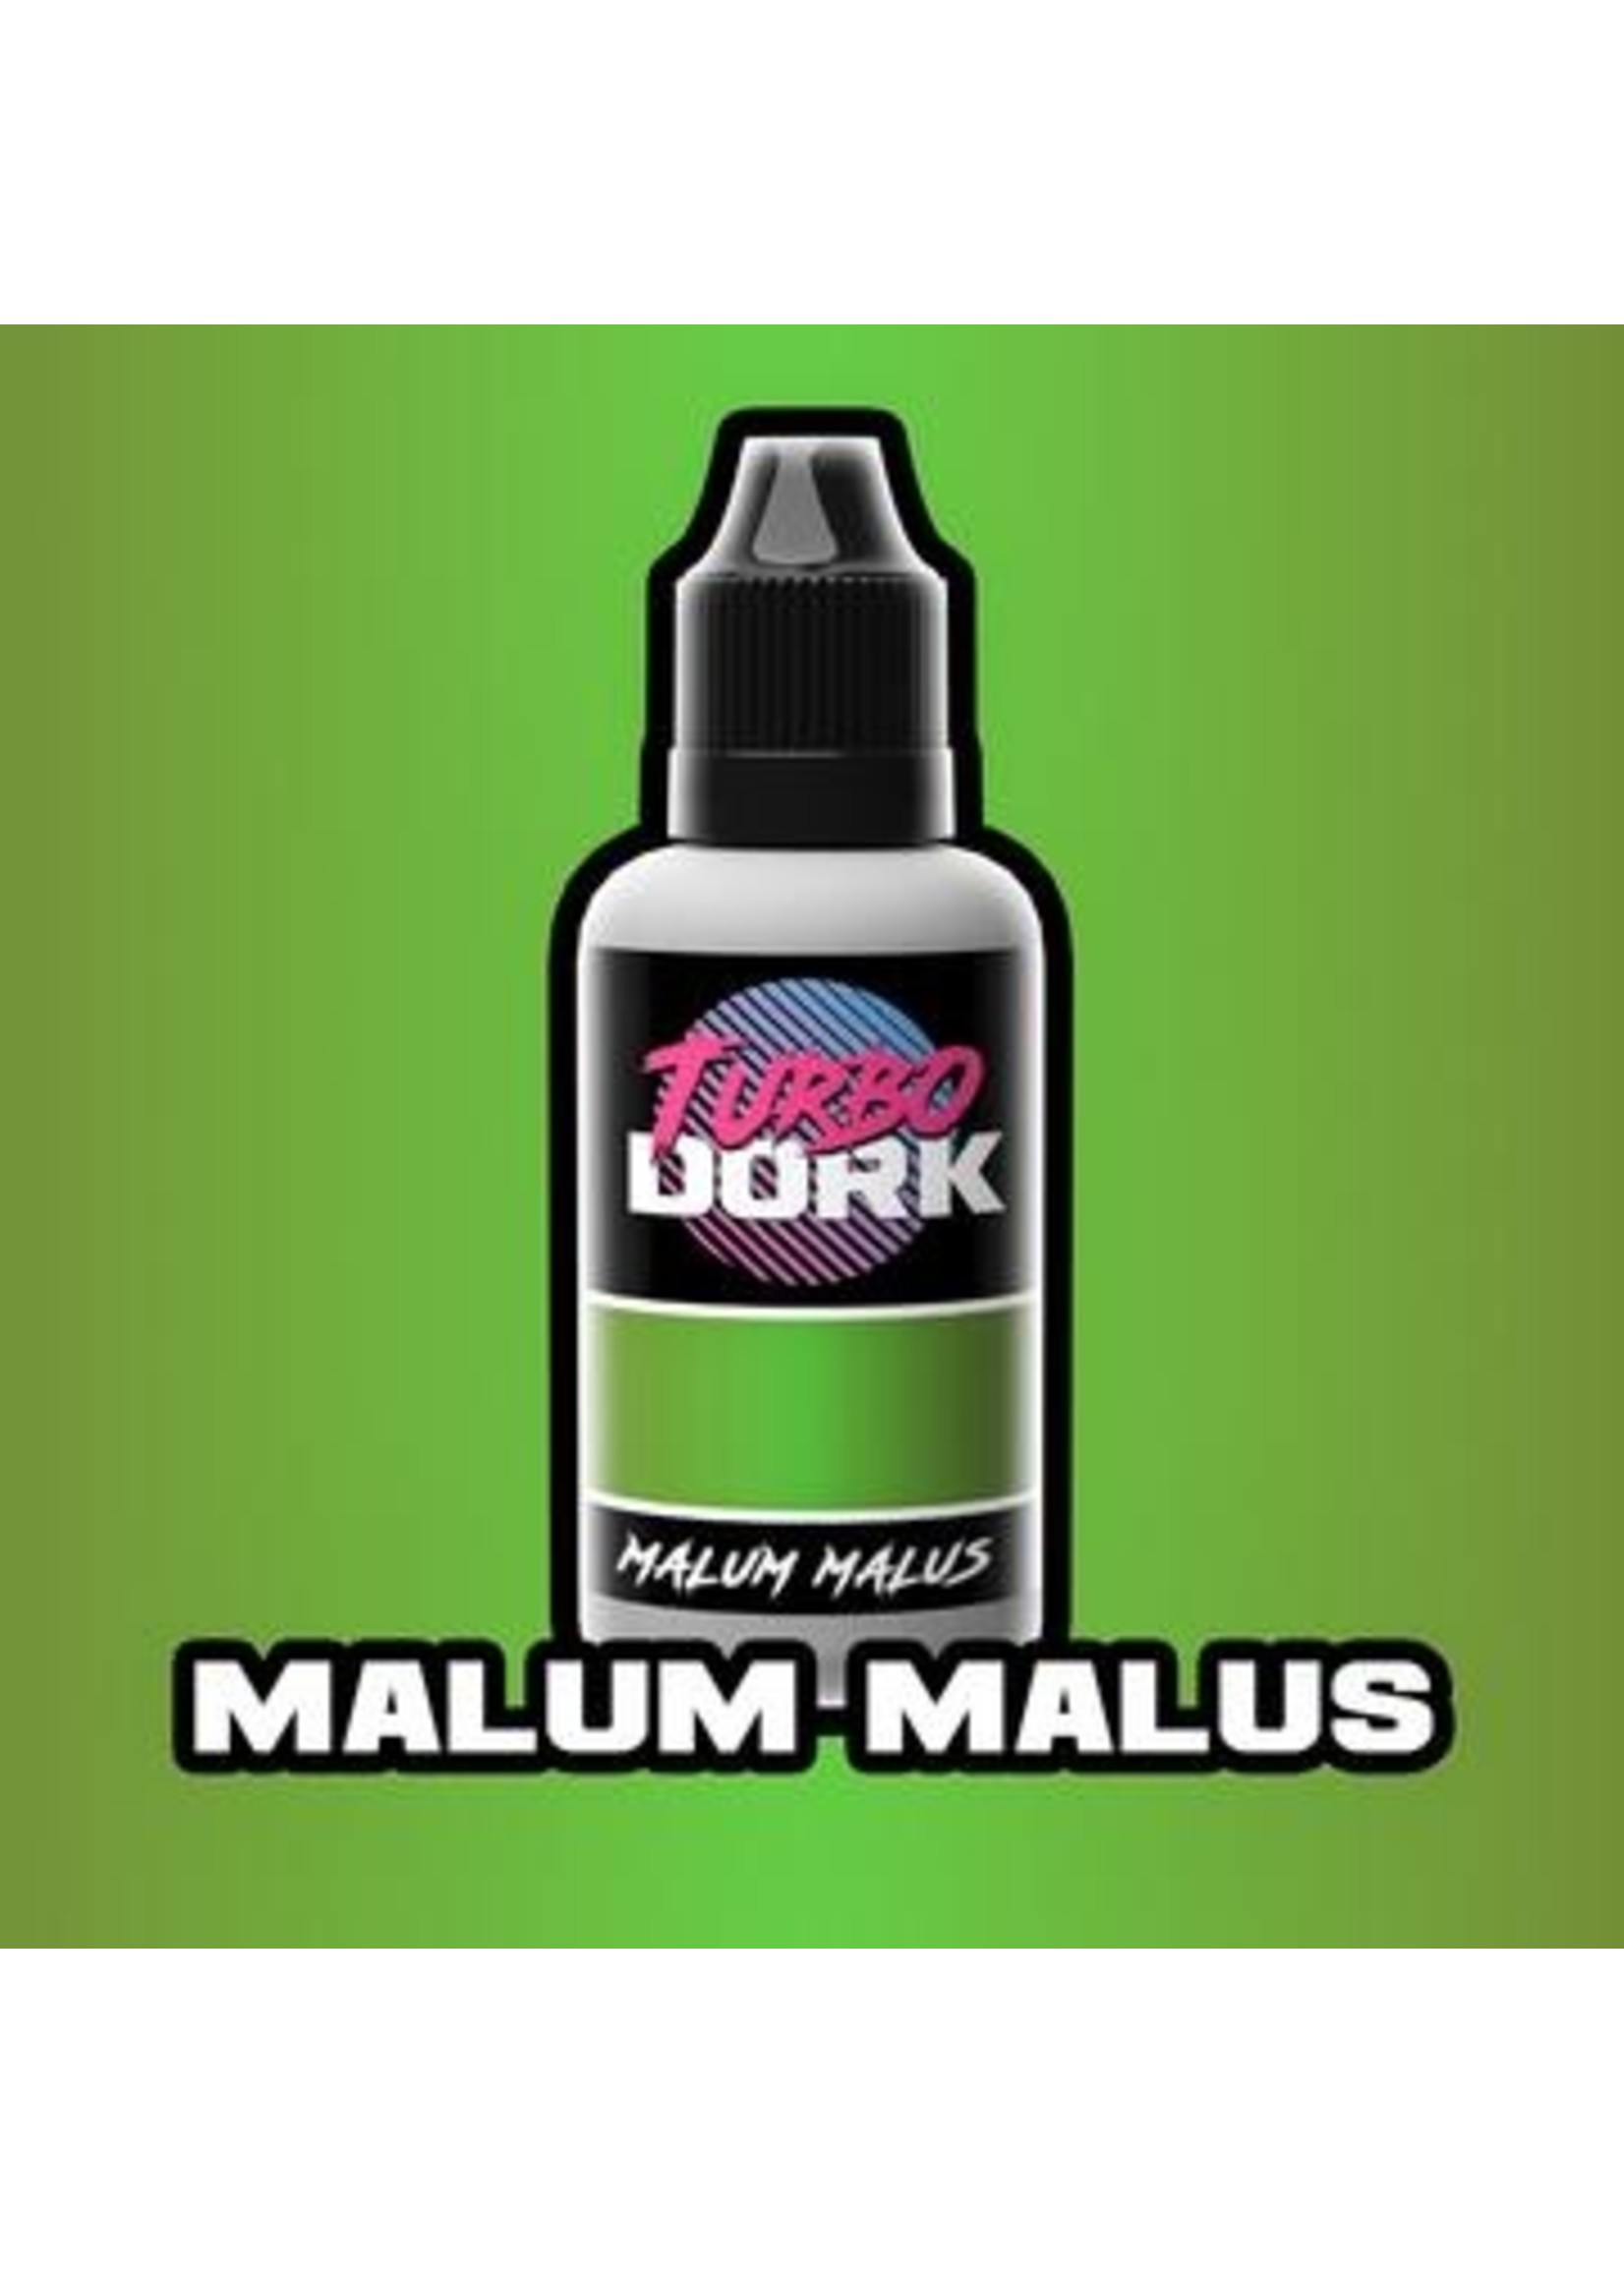 Turbo Dork Malum Malus Metallic Acrylic Paint - 20ml Bottle